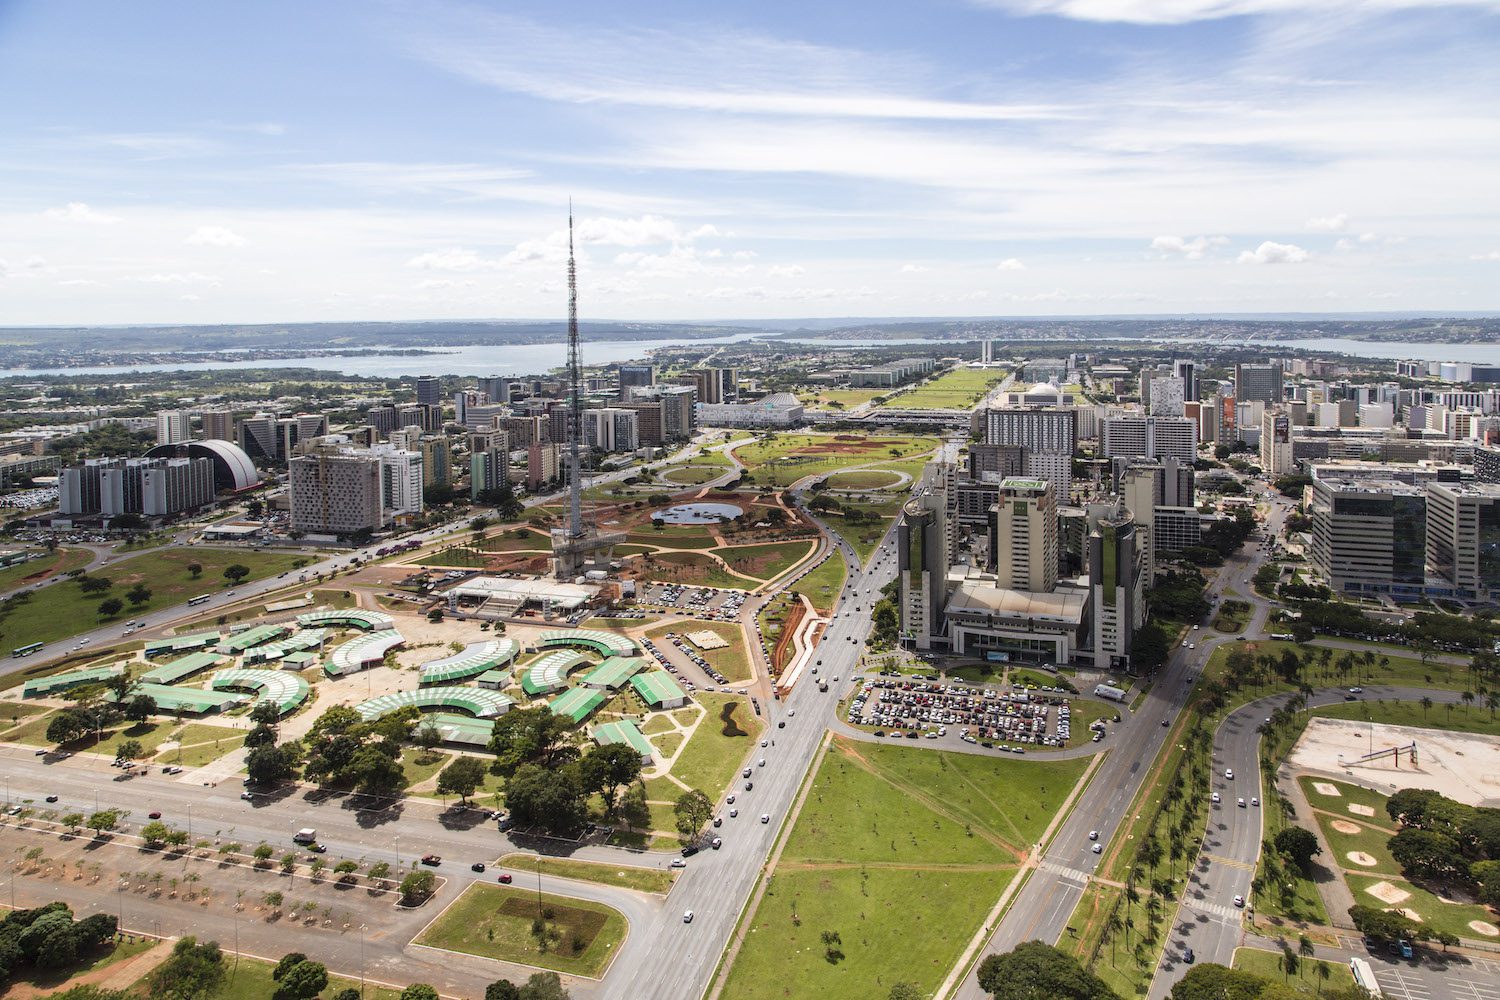 Brasilia: How Not to Build a City